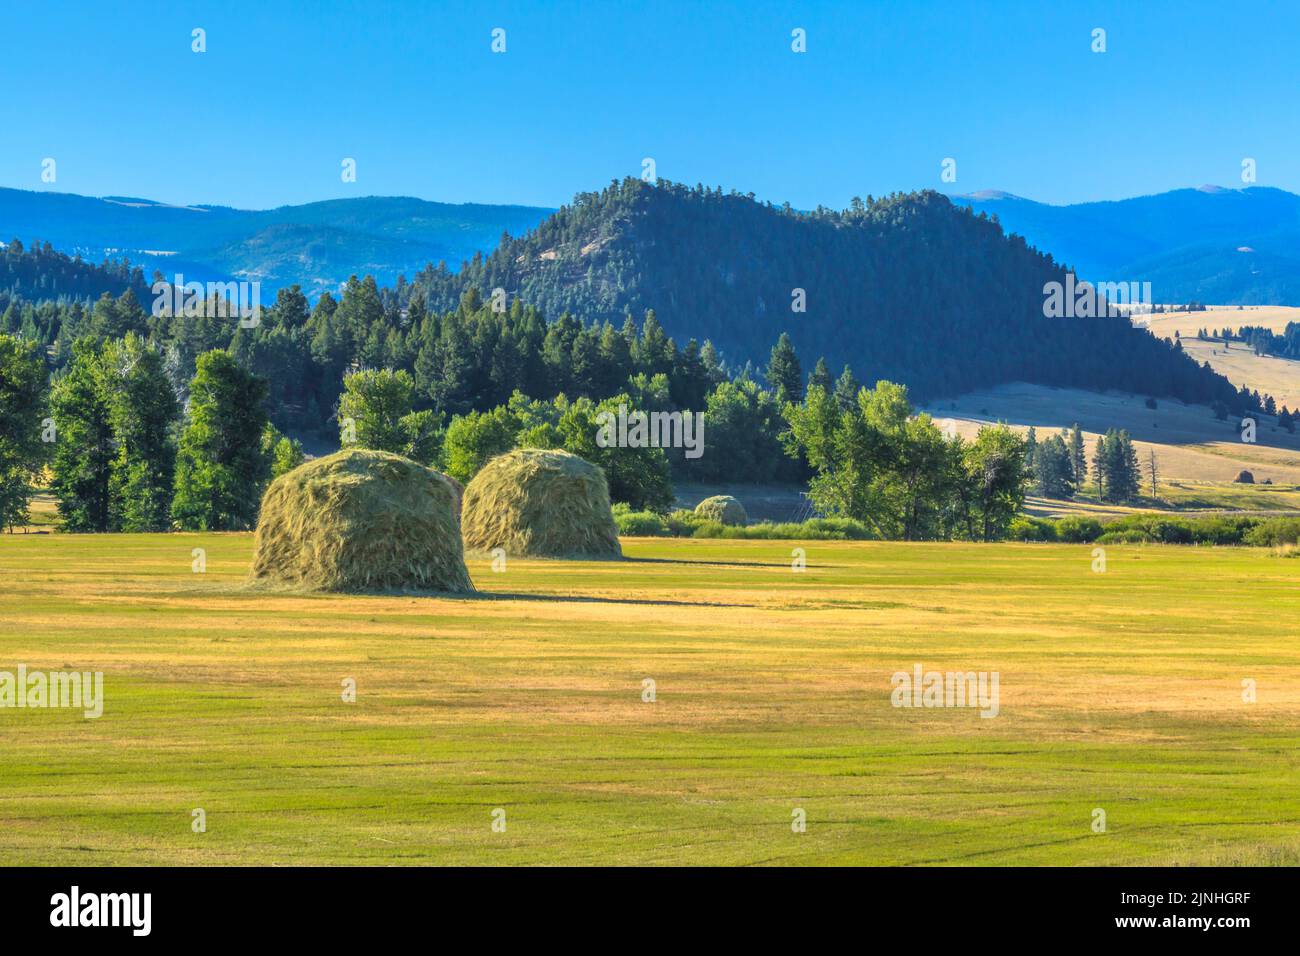 haystacks in the avon valley near avon, montana Stock Photo